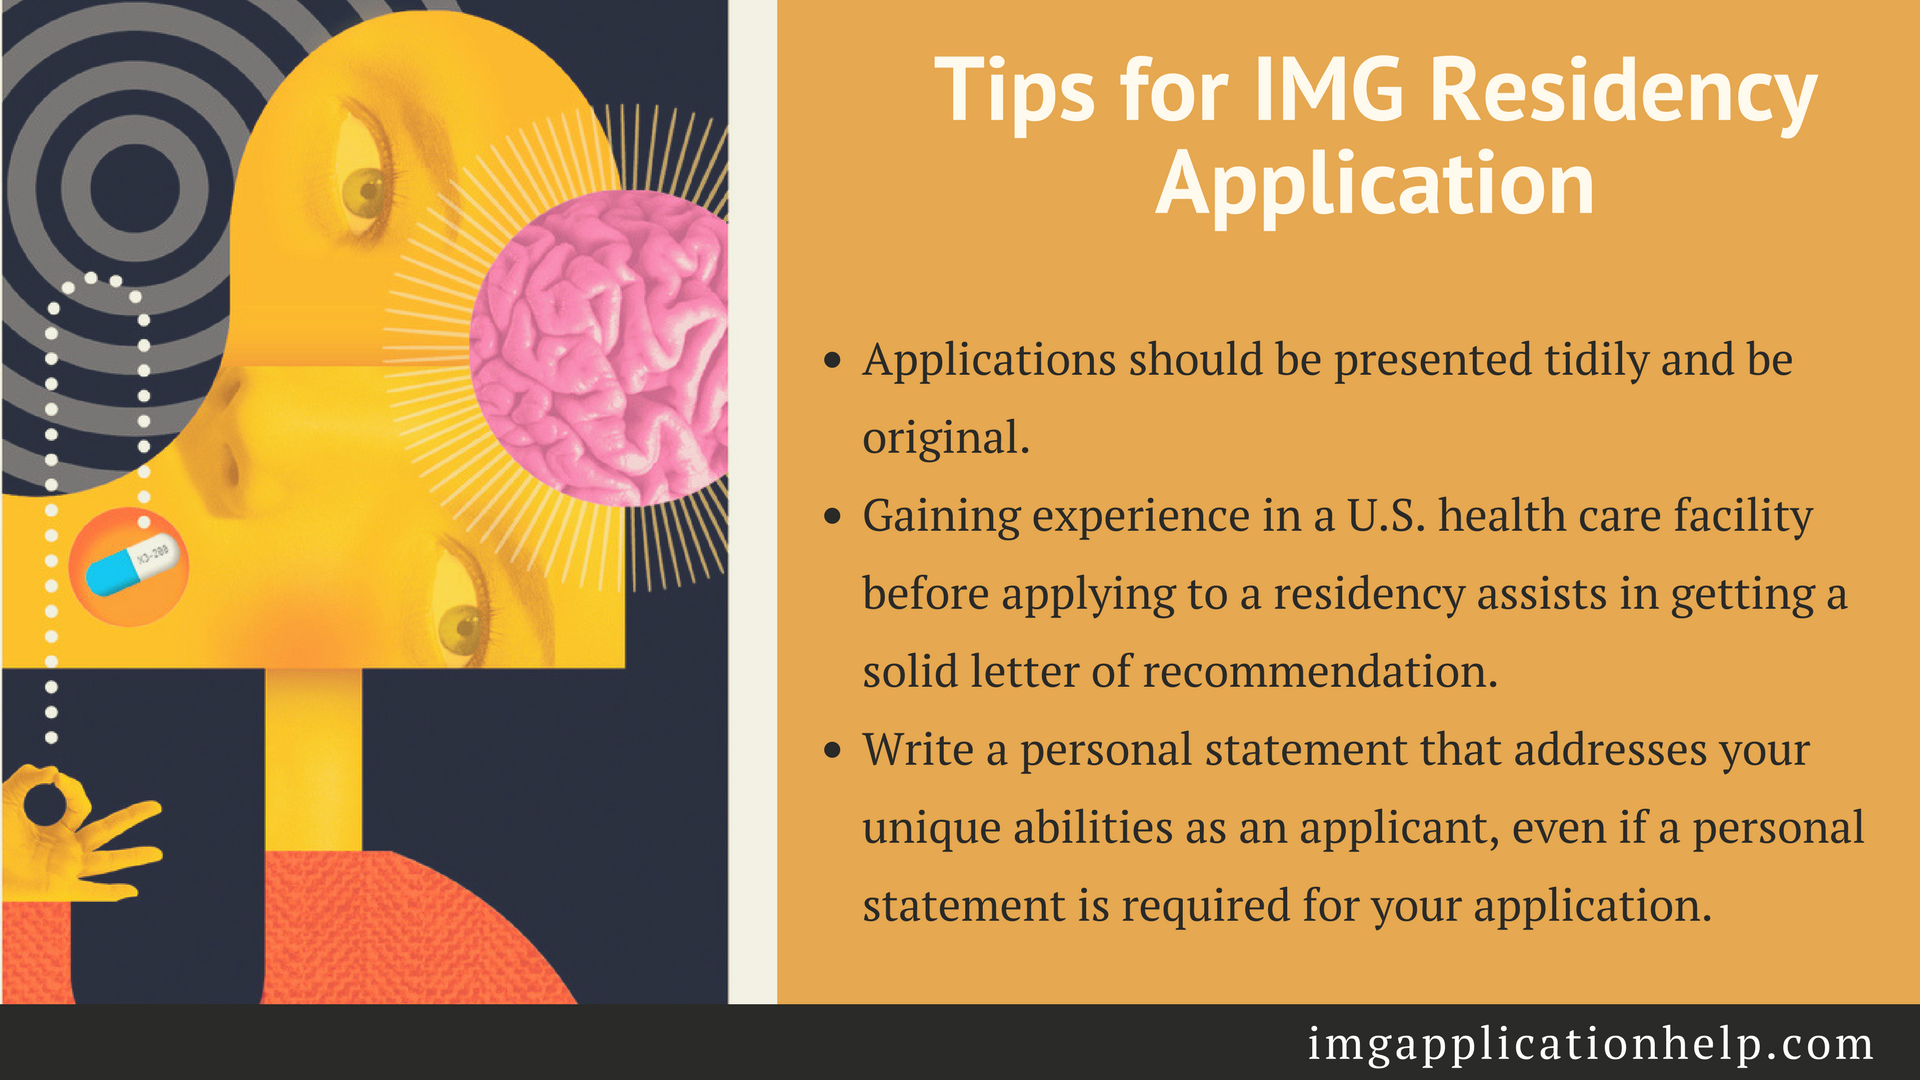 img residency application tips